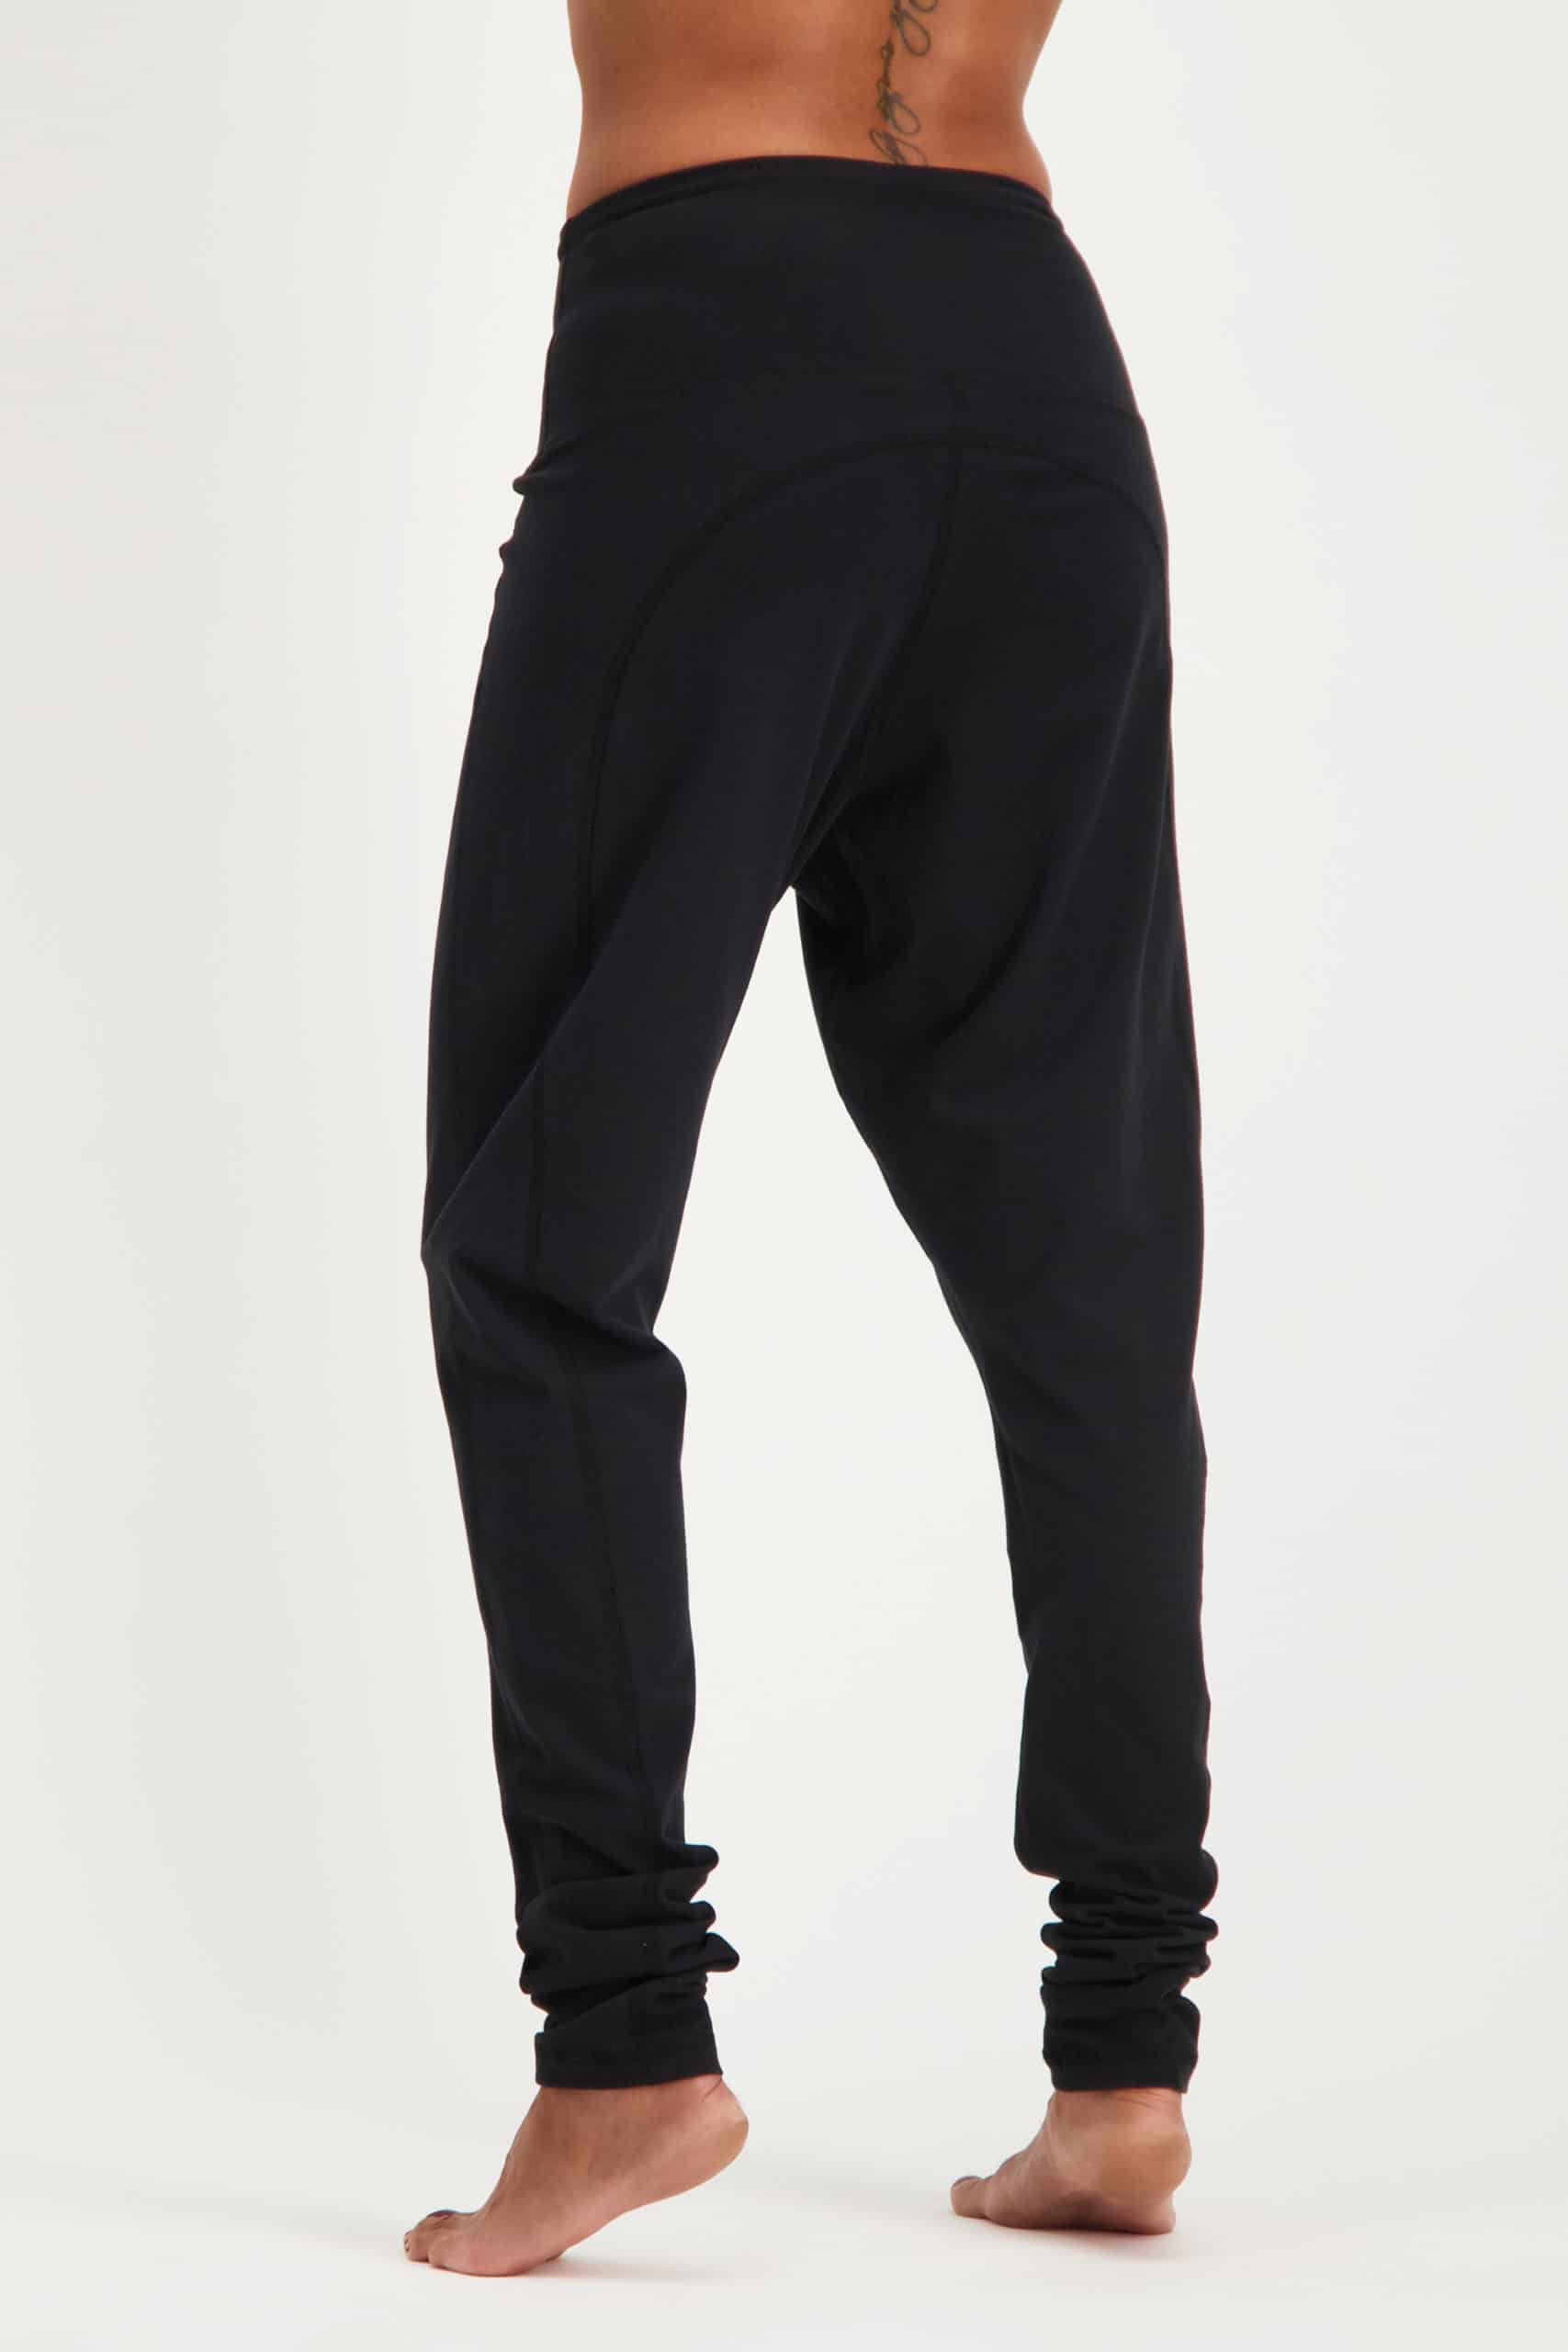 https://www.urban-goddess.com/wp-content/uploads/2022/12/products-Zen-leggings-black-10195527-model-back-scaled-1.jpg